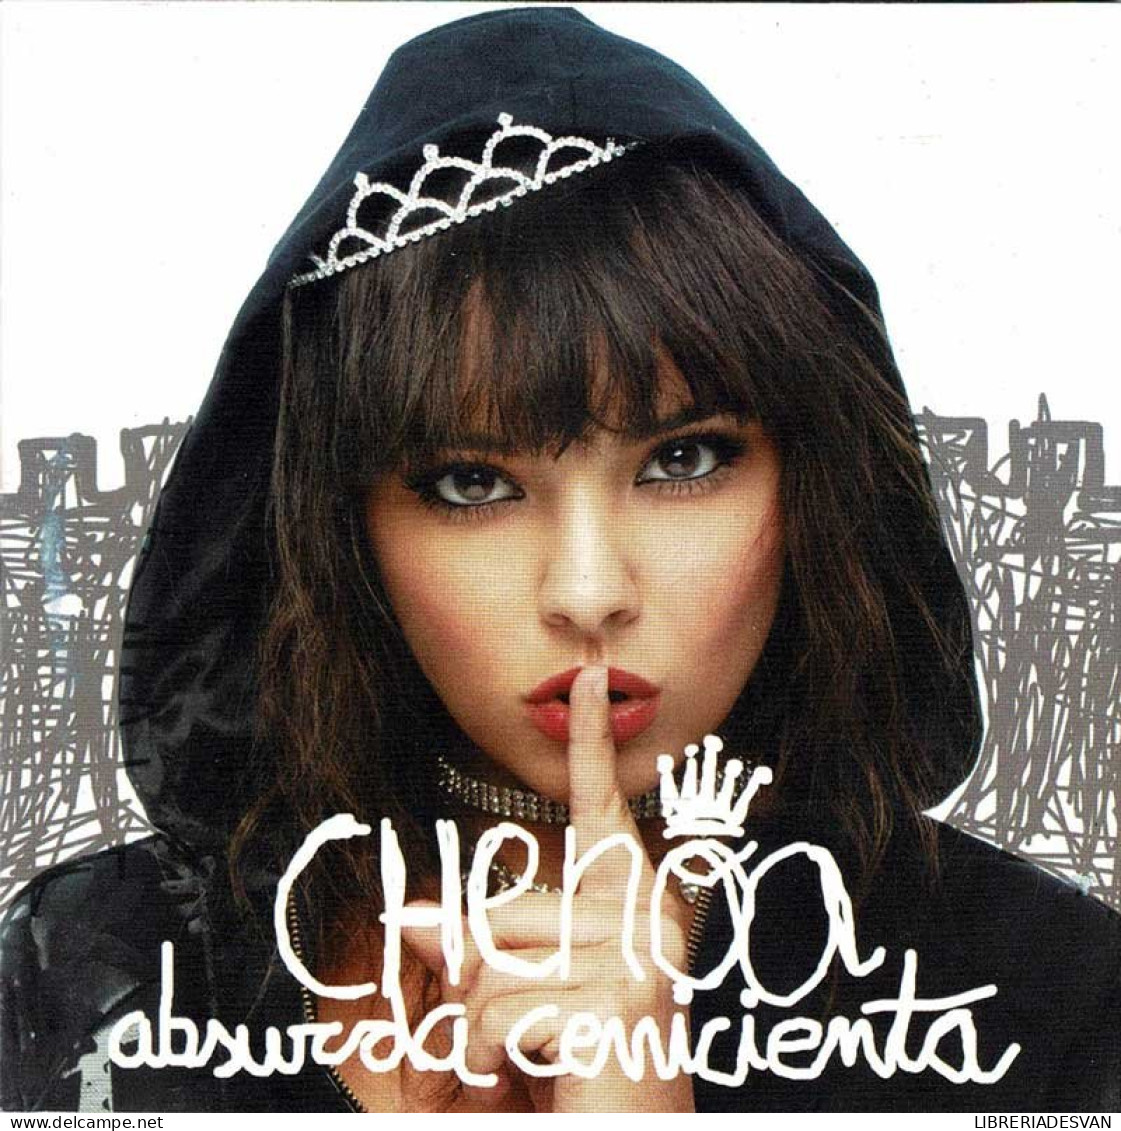 Chenoa - Absurda Cenicienta. CD - Disco & Pop